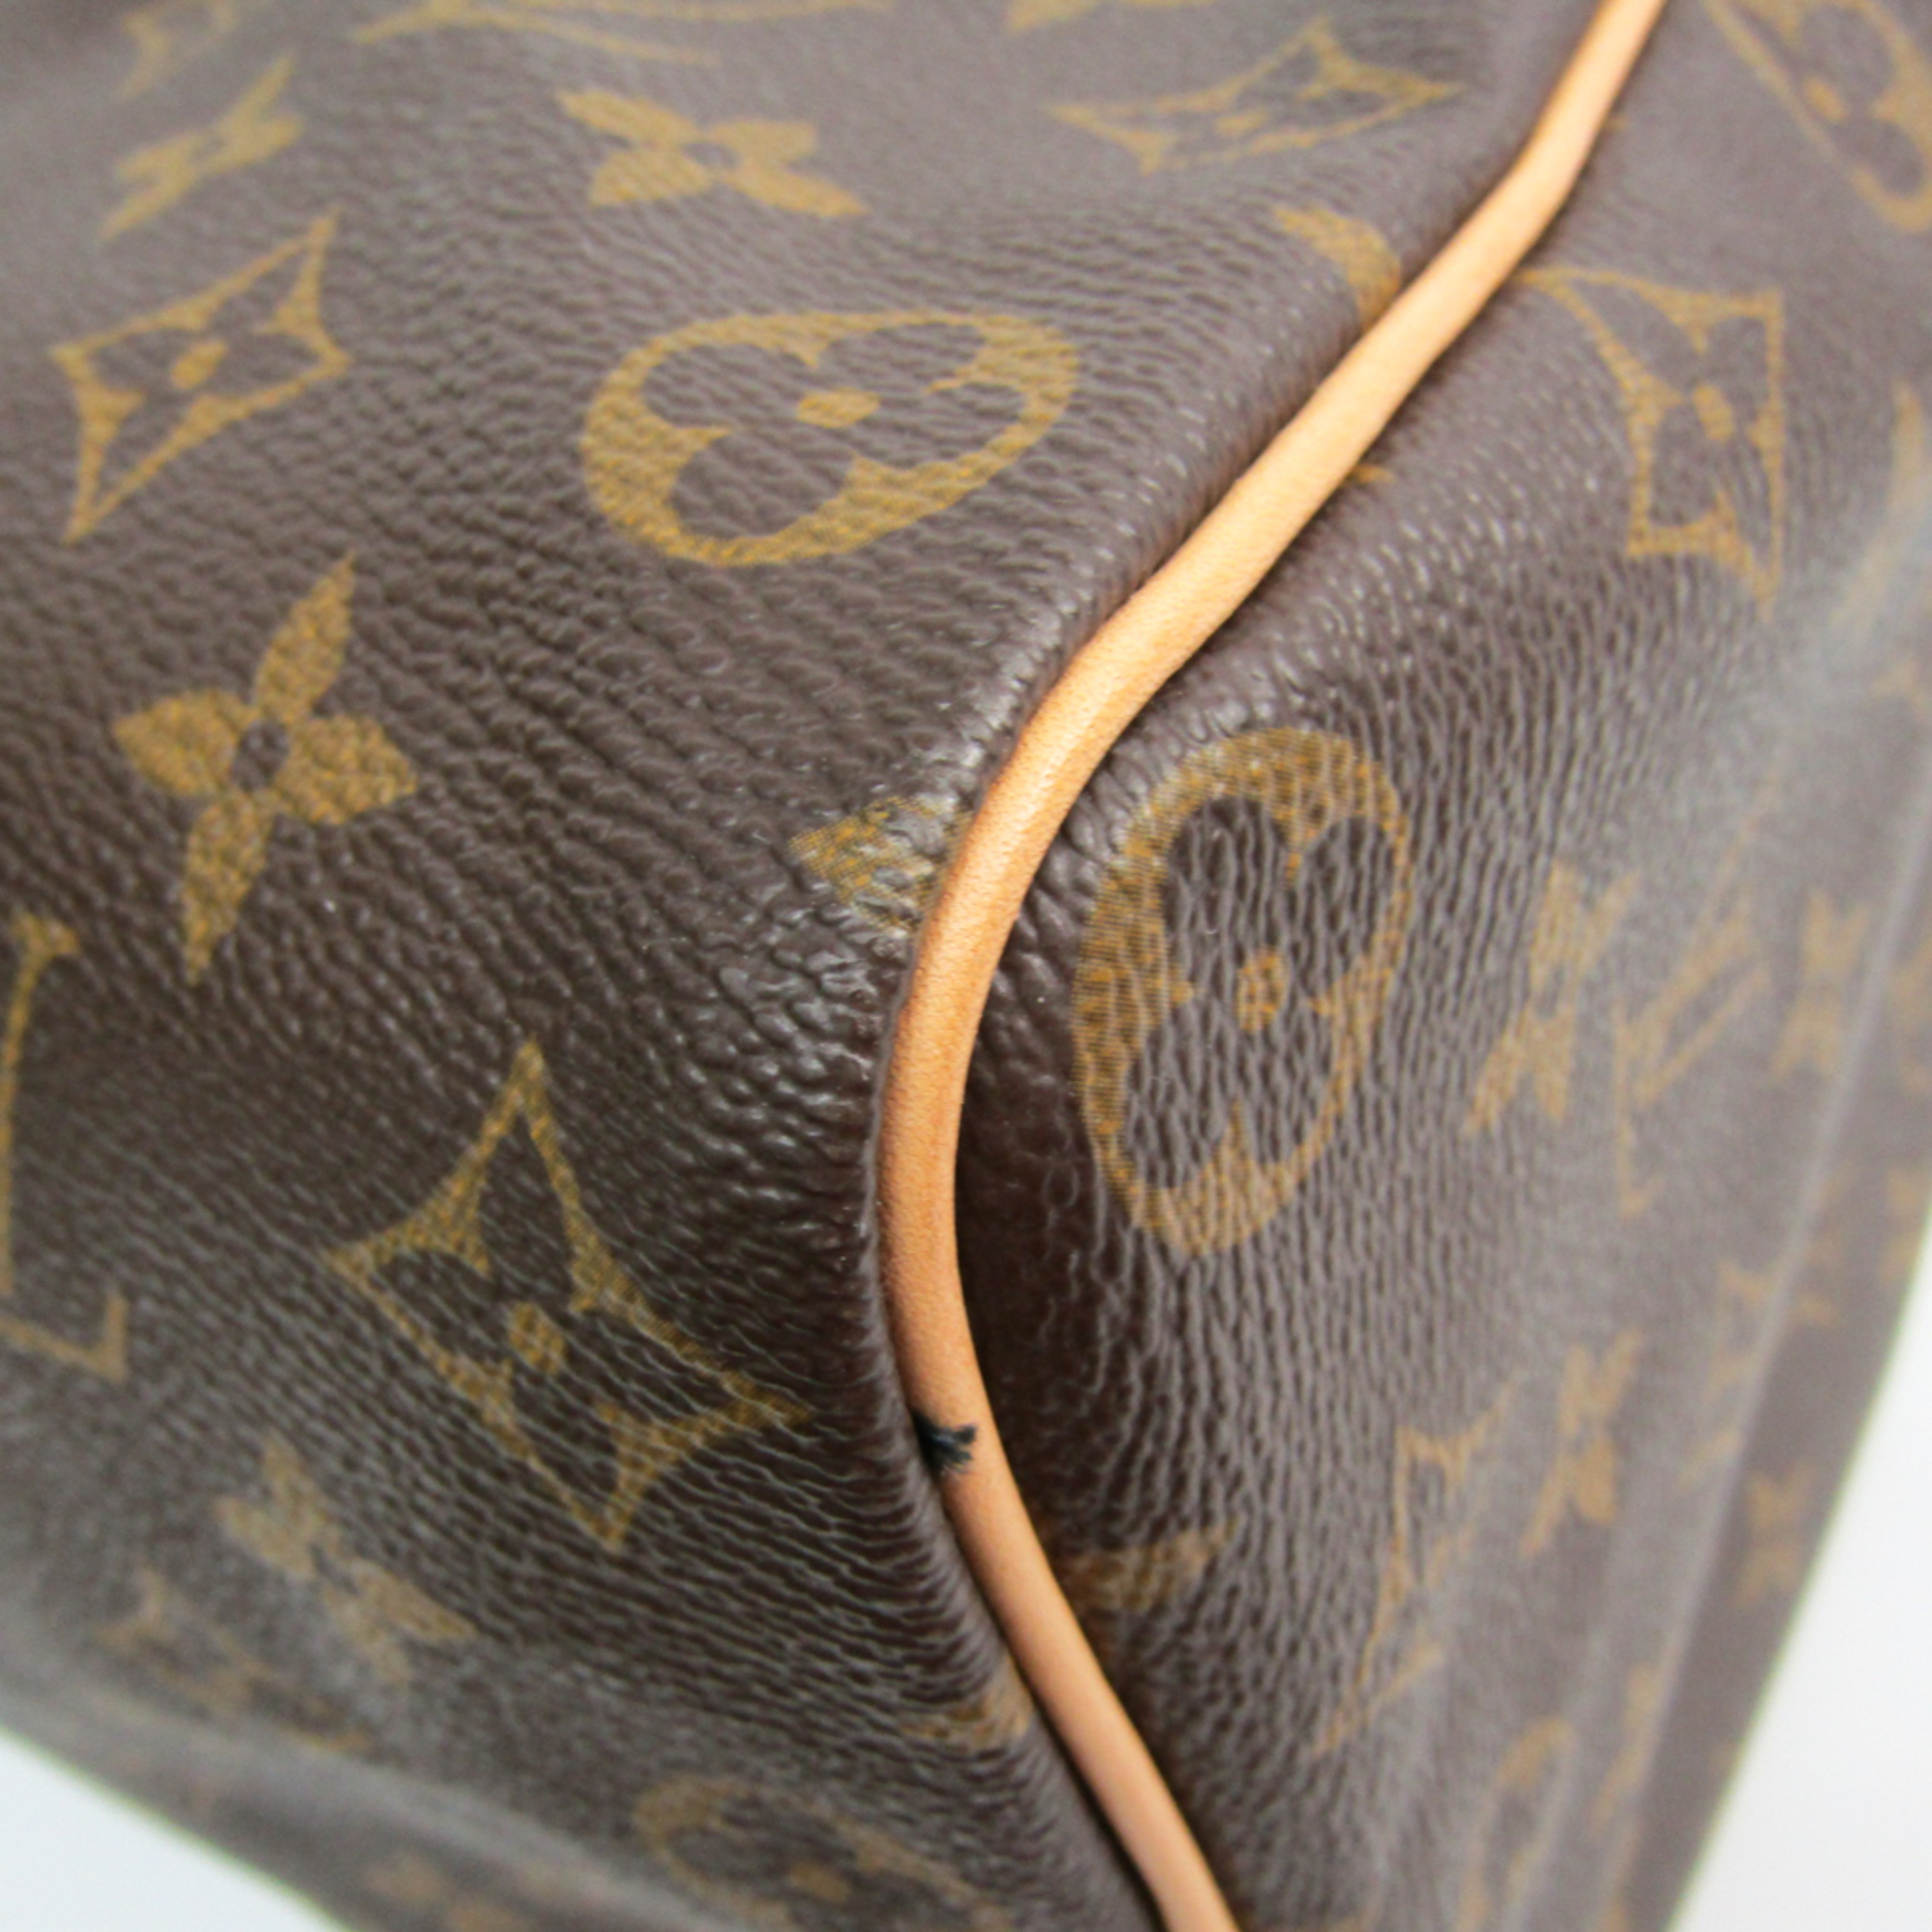 Louis Vuitton Monogram Speedy 35 M41524 Women's Handbag Monogram